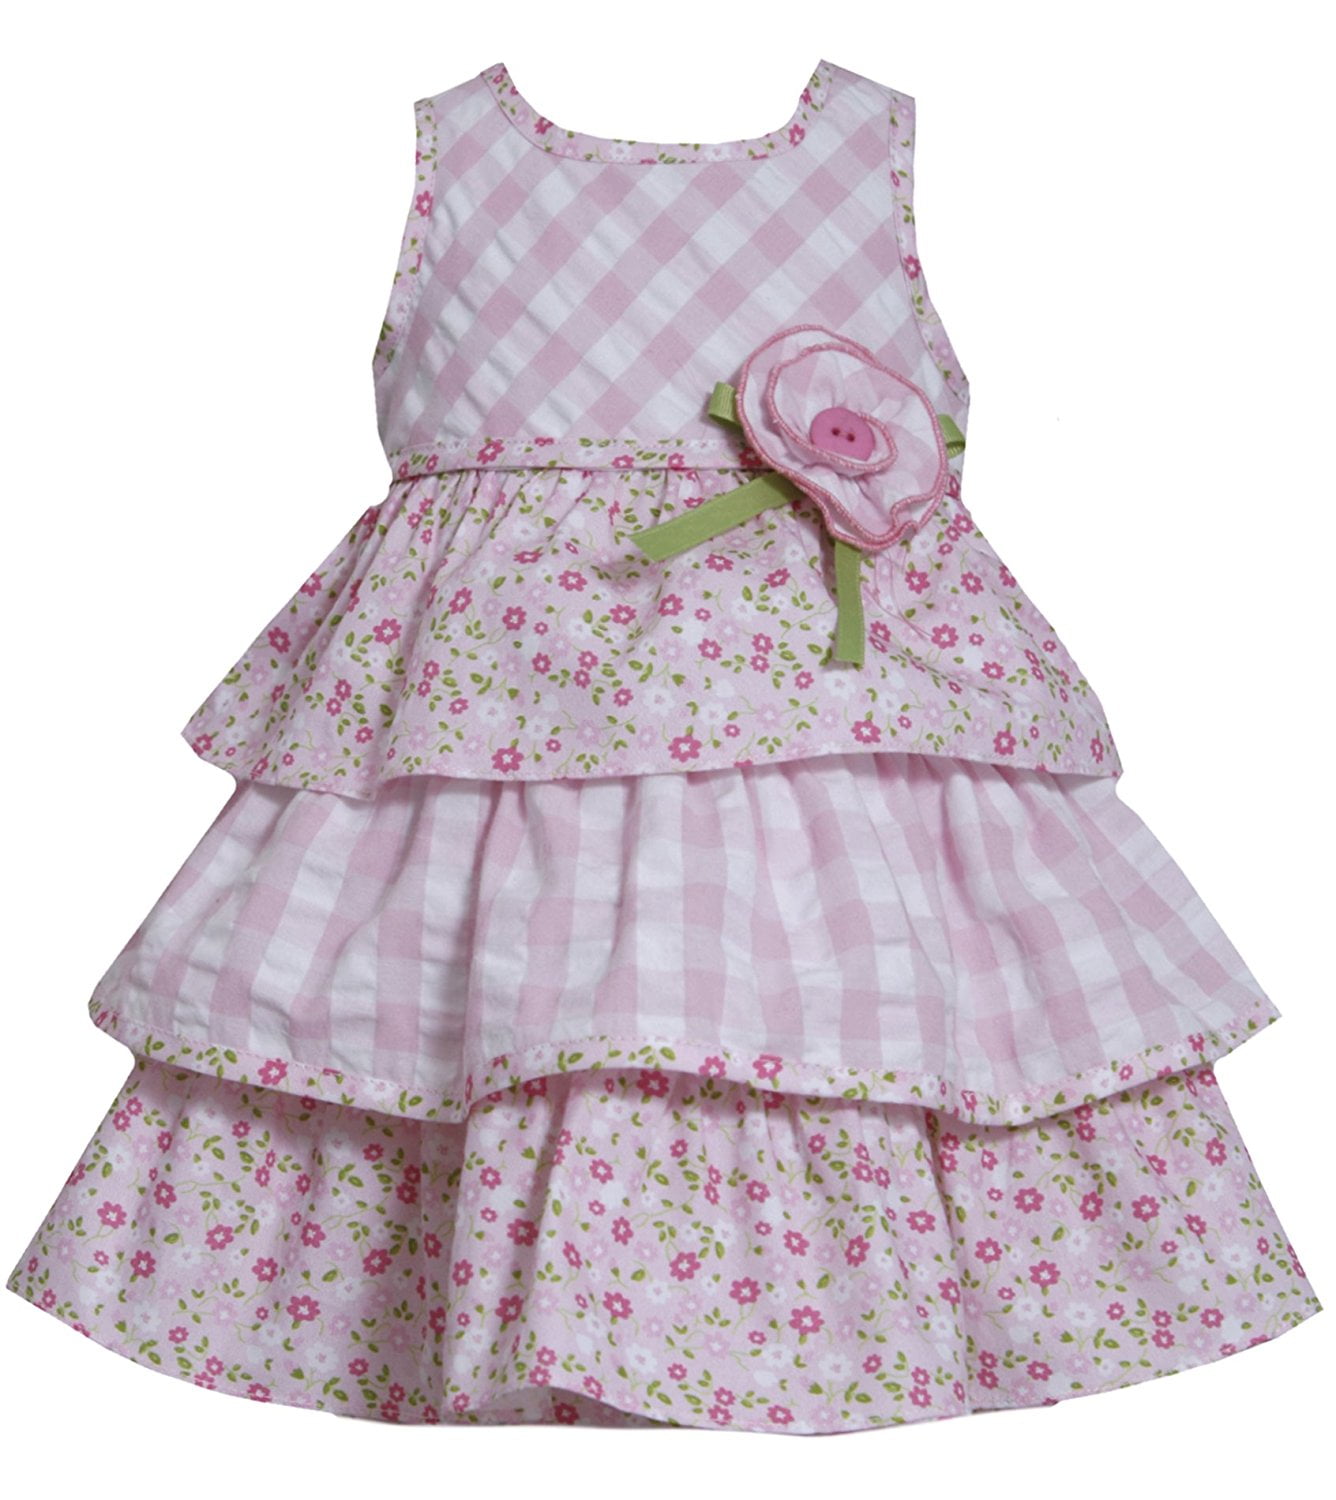 NEW Bonnie Jean Pink White Check Seersucker Spring Summer Easter Dress 4 5 6 6X 